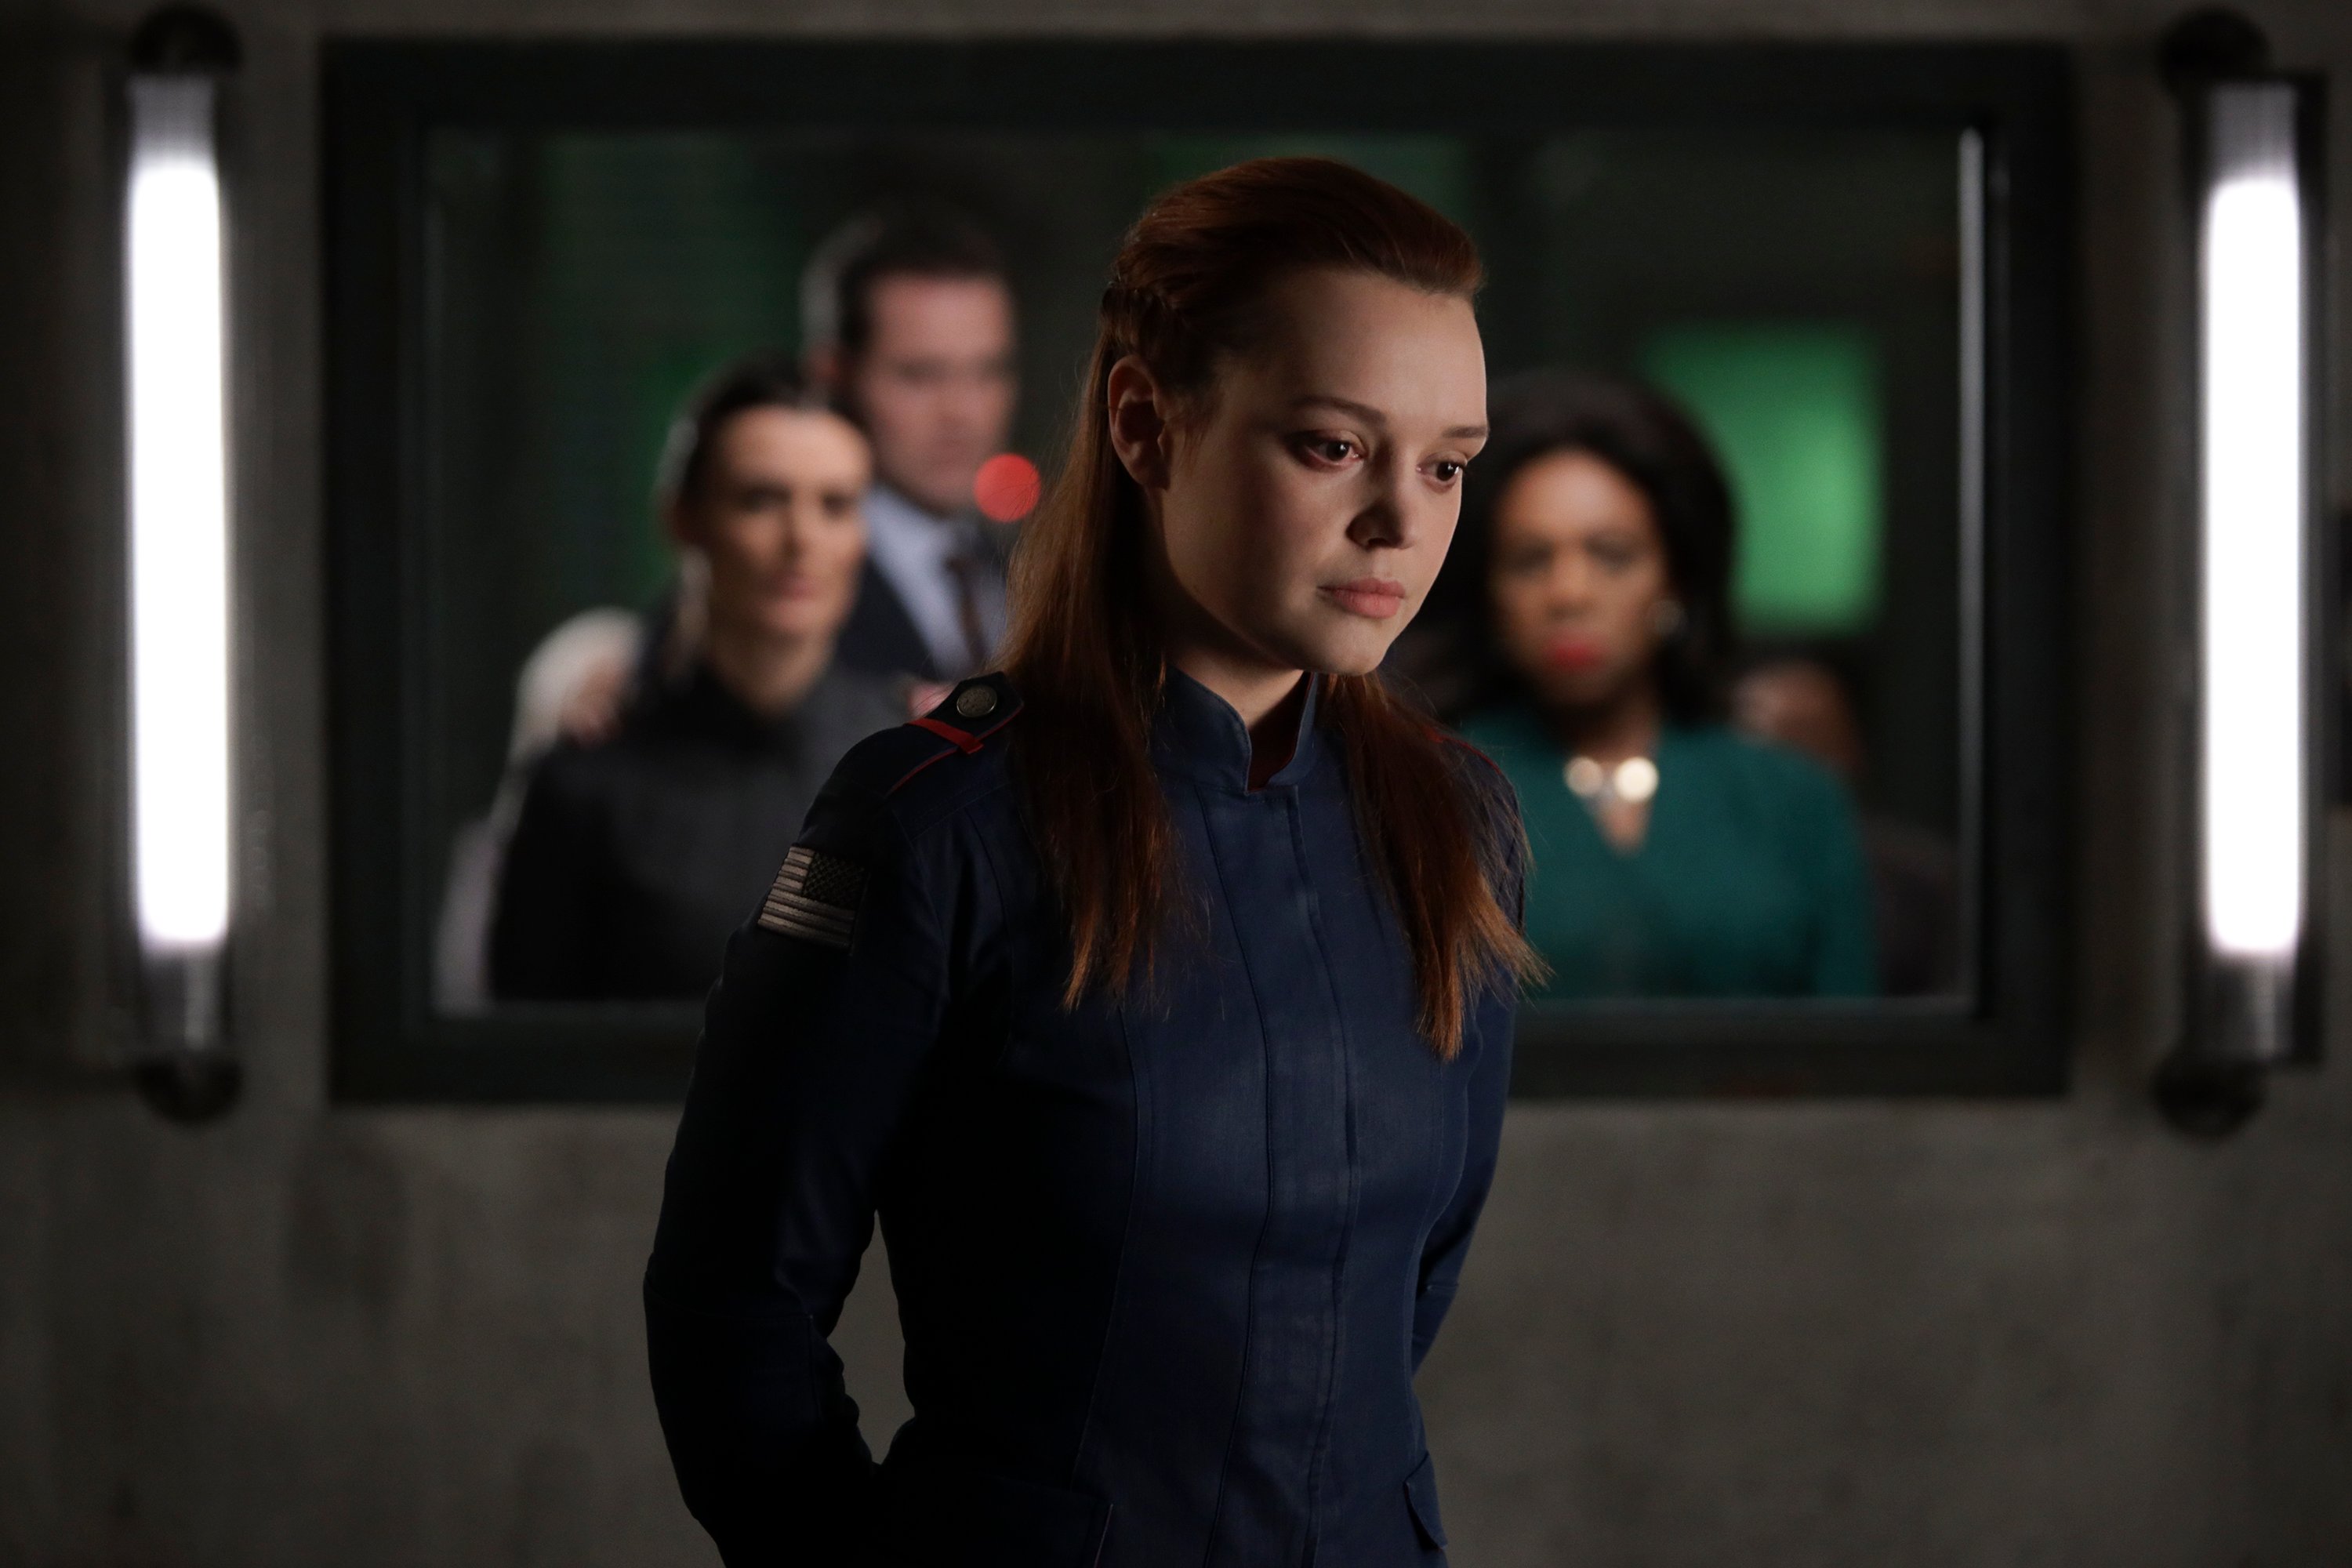 Jessica Sutton as Tally 'Motherland: Fort Salem' wearing army uniform in interrogation room in Season 2